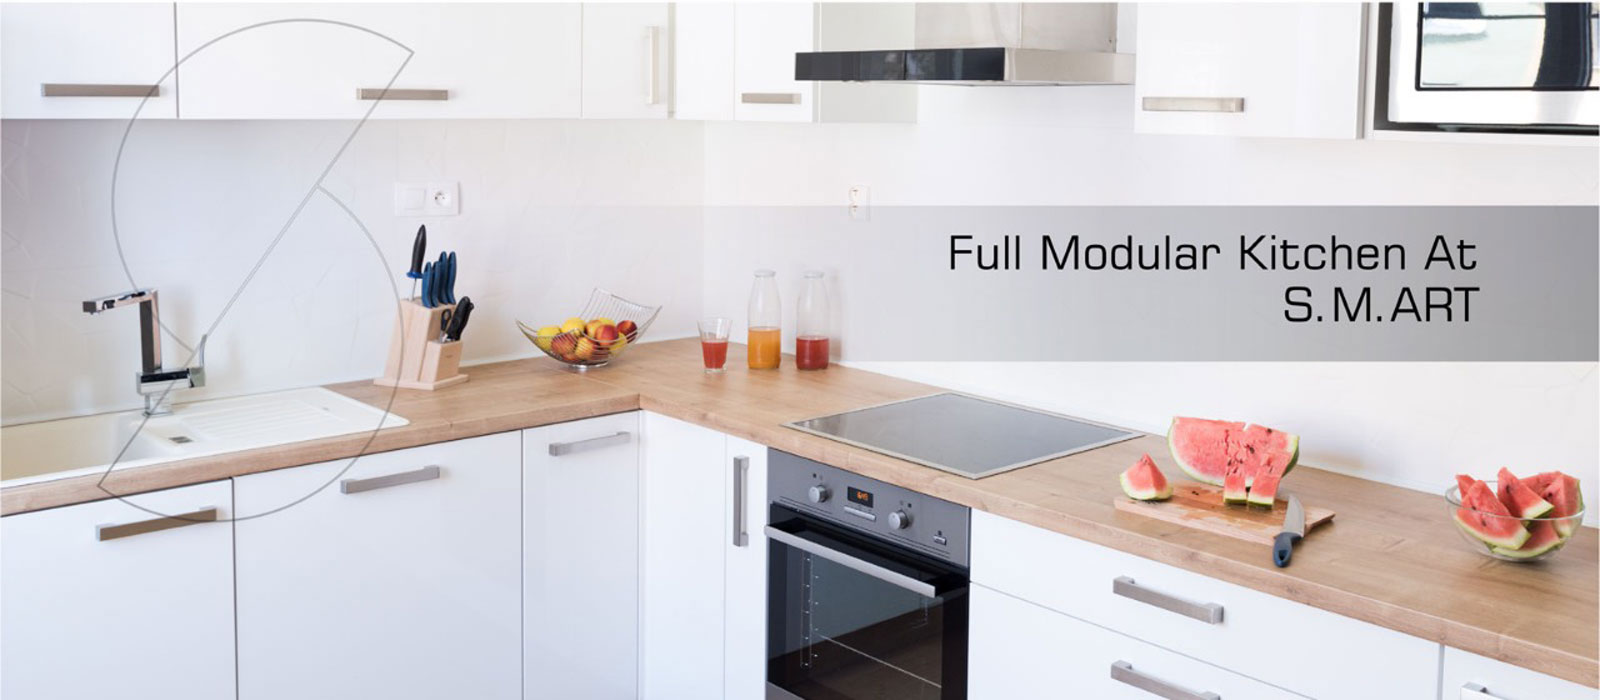 Full Modular Kitchen Manufacturer